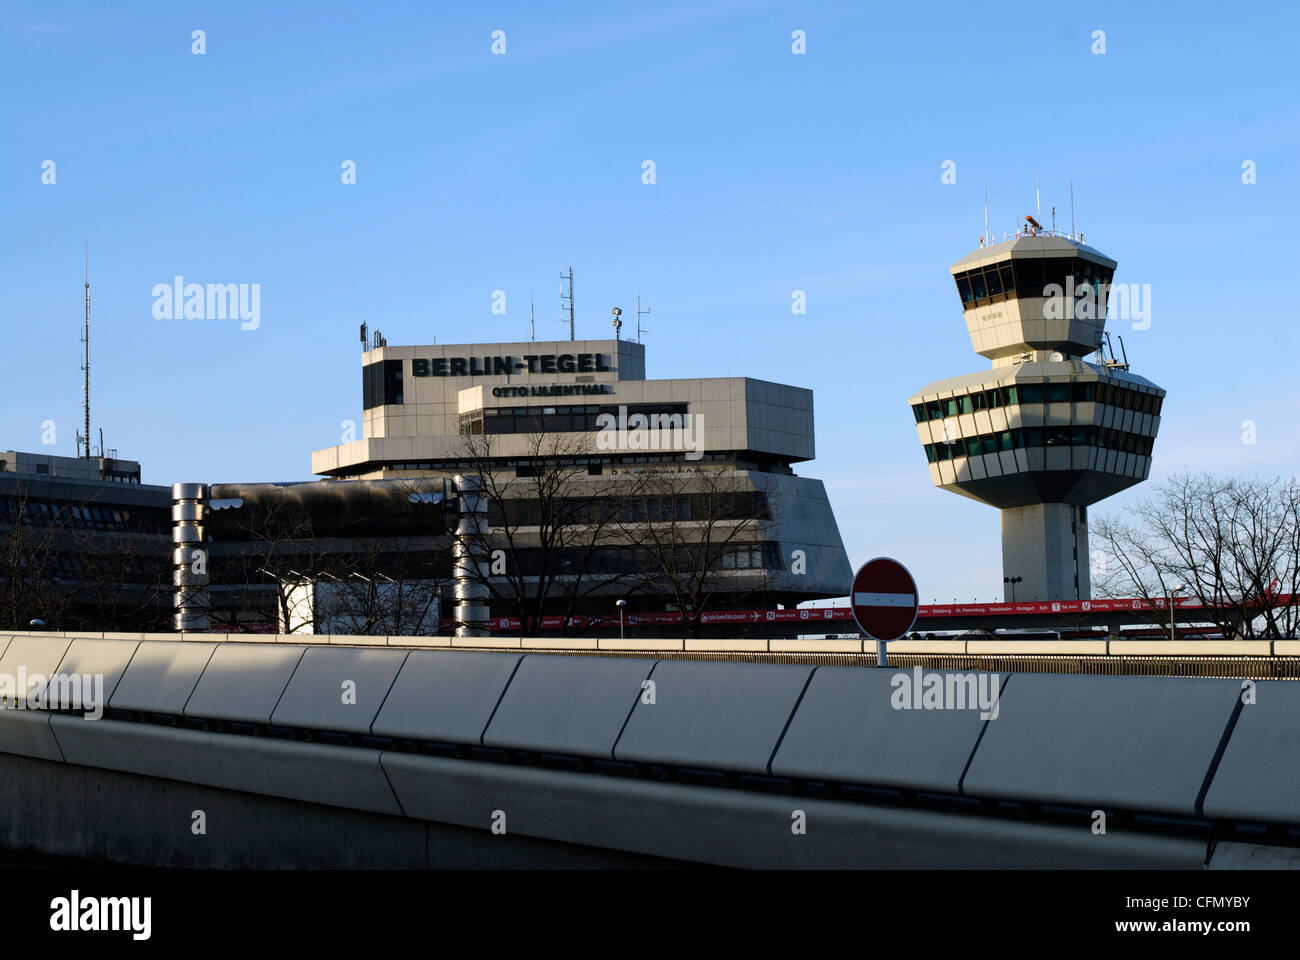 El Aeropuerto de Berlín-Tegel, Otto Lilienthal Foto de stock